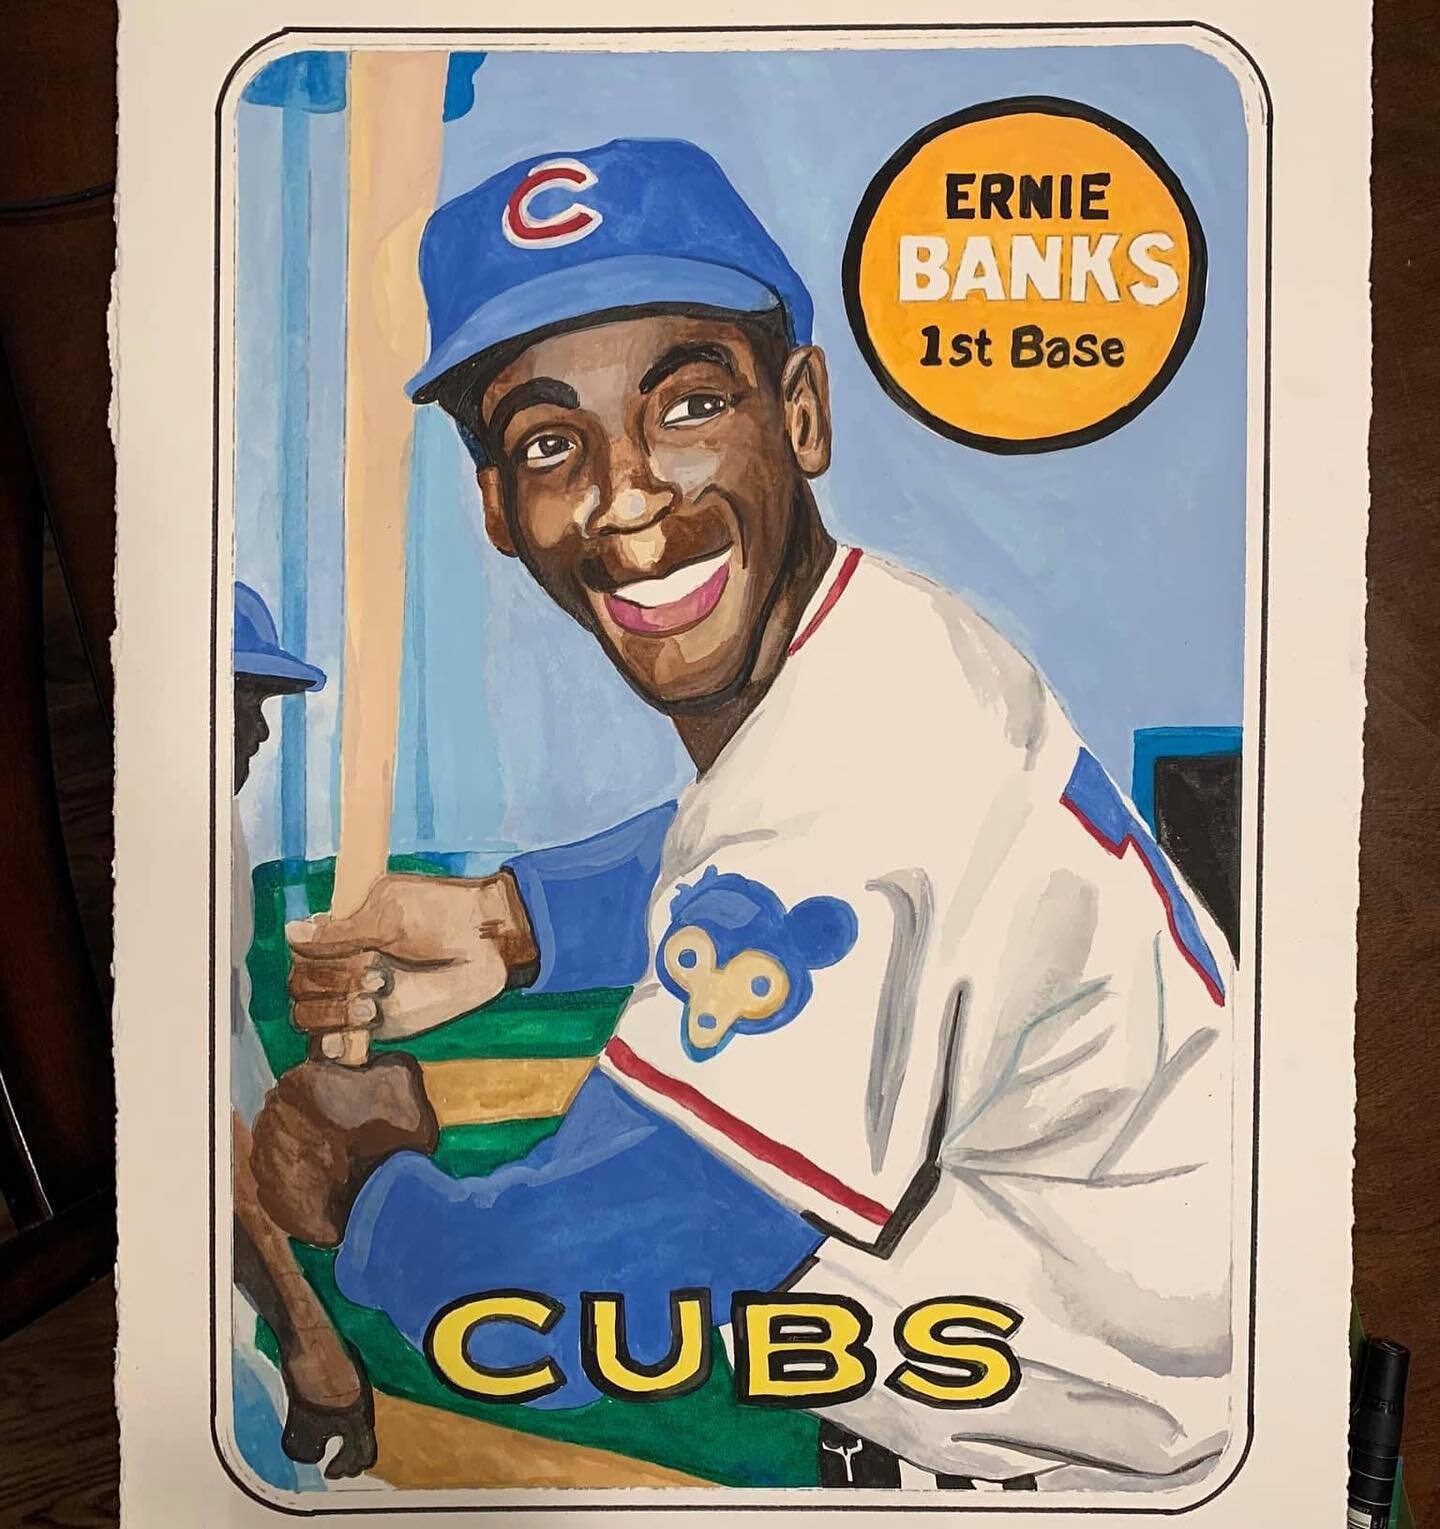 Mr. Cub, Ernie Banks.  His smile lights up the room.